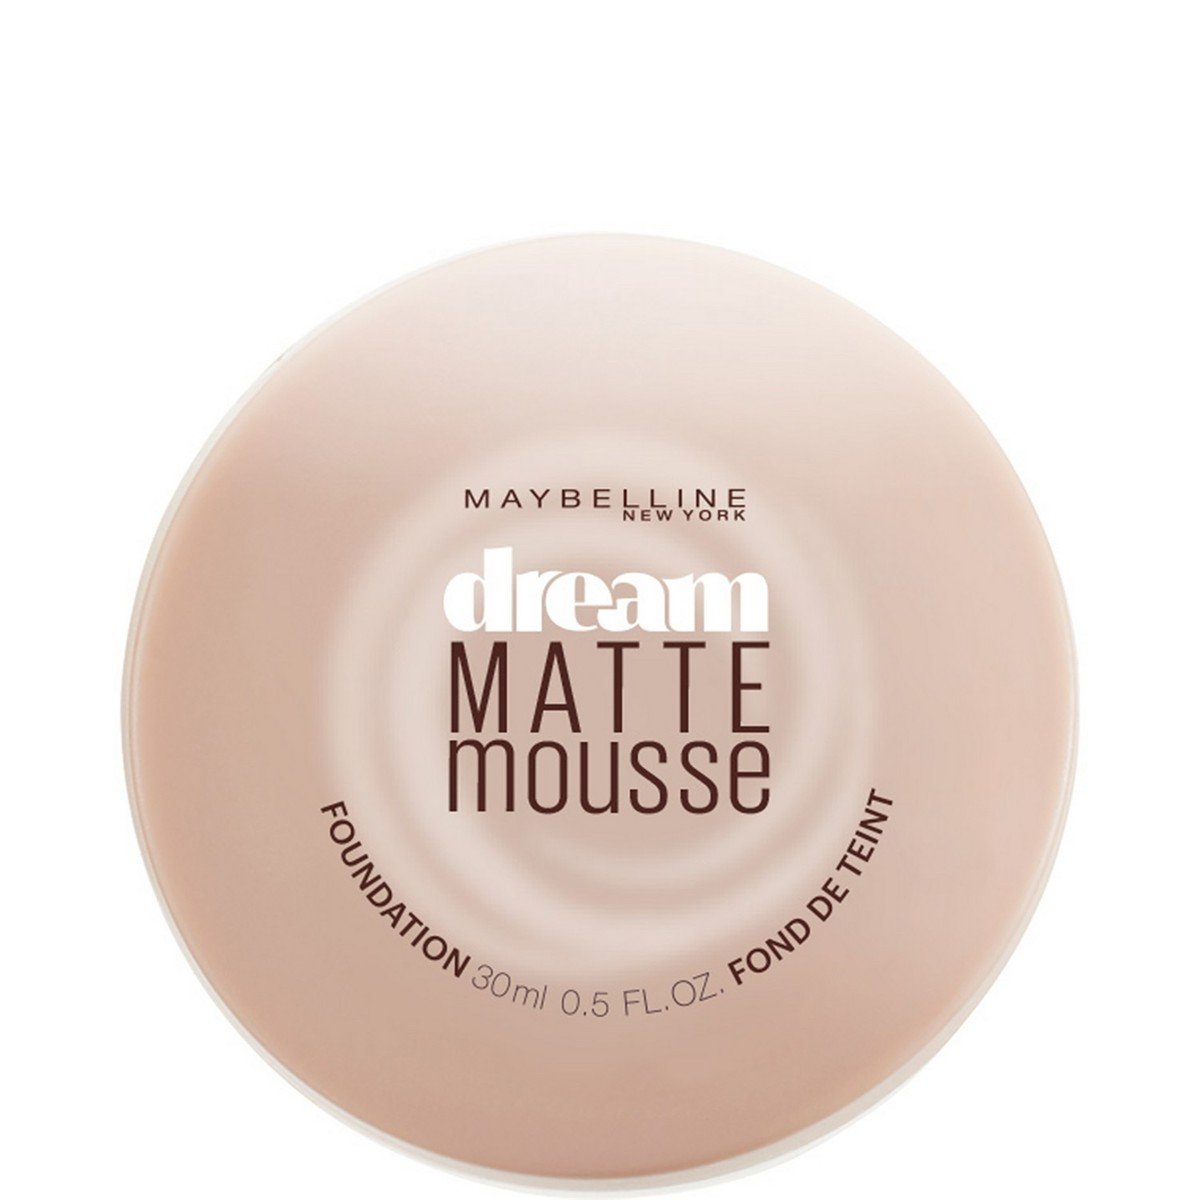 Maybelline Dream Matte Mousse Foundation - Light Beige 1pc